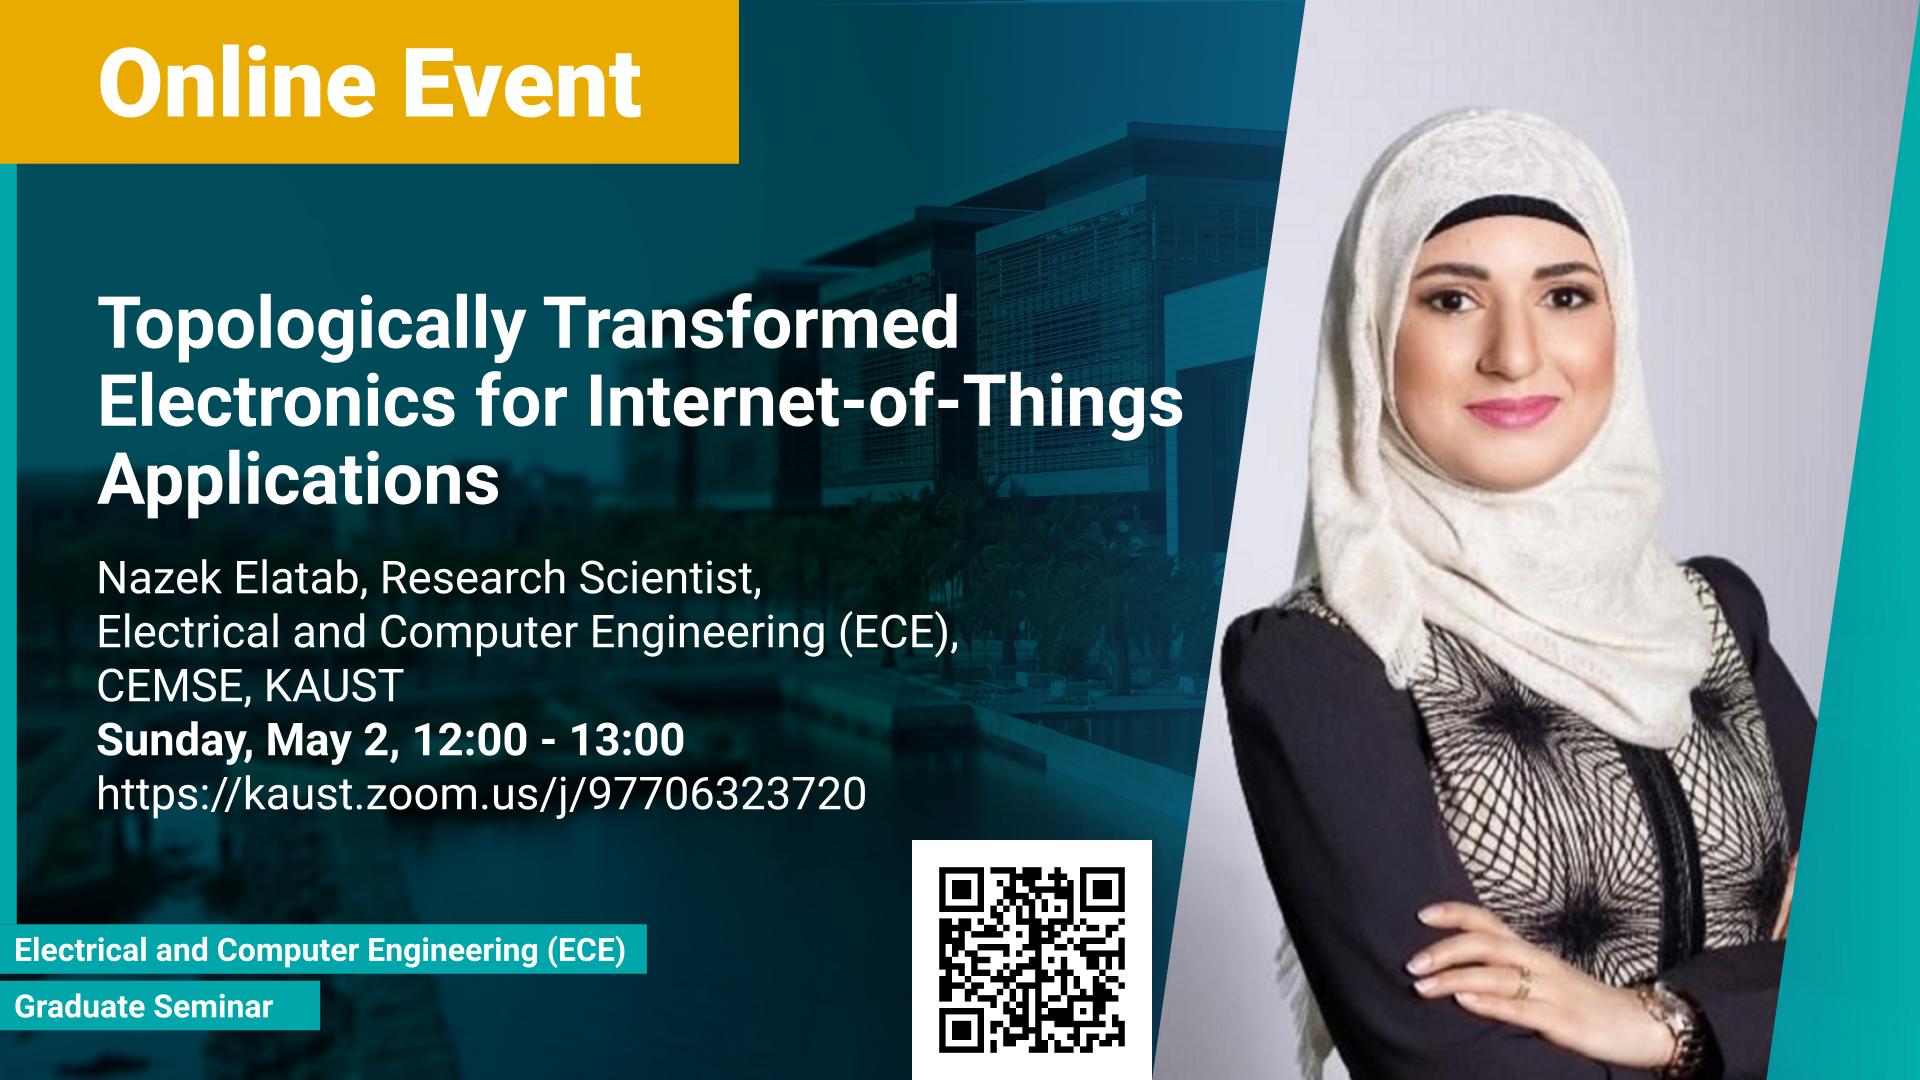 KAUST-CEMSE-ECE-Graduate-Seminar-Nazek-El-Atab-Topologically-Transformed-Electronics-for-Internet-of-Things-Applications.jpg